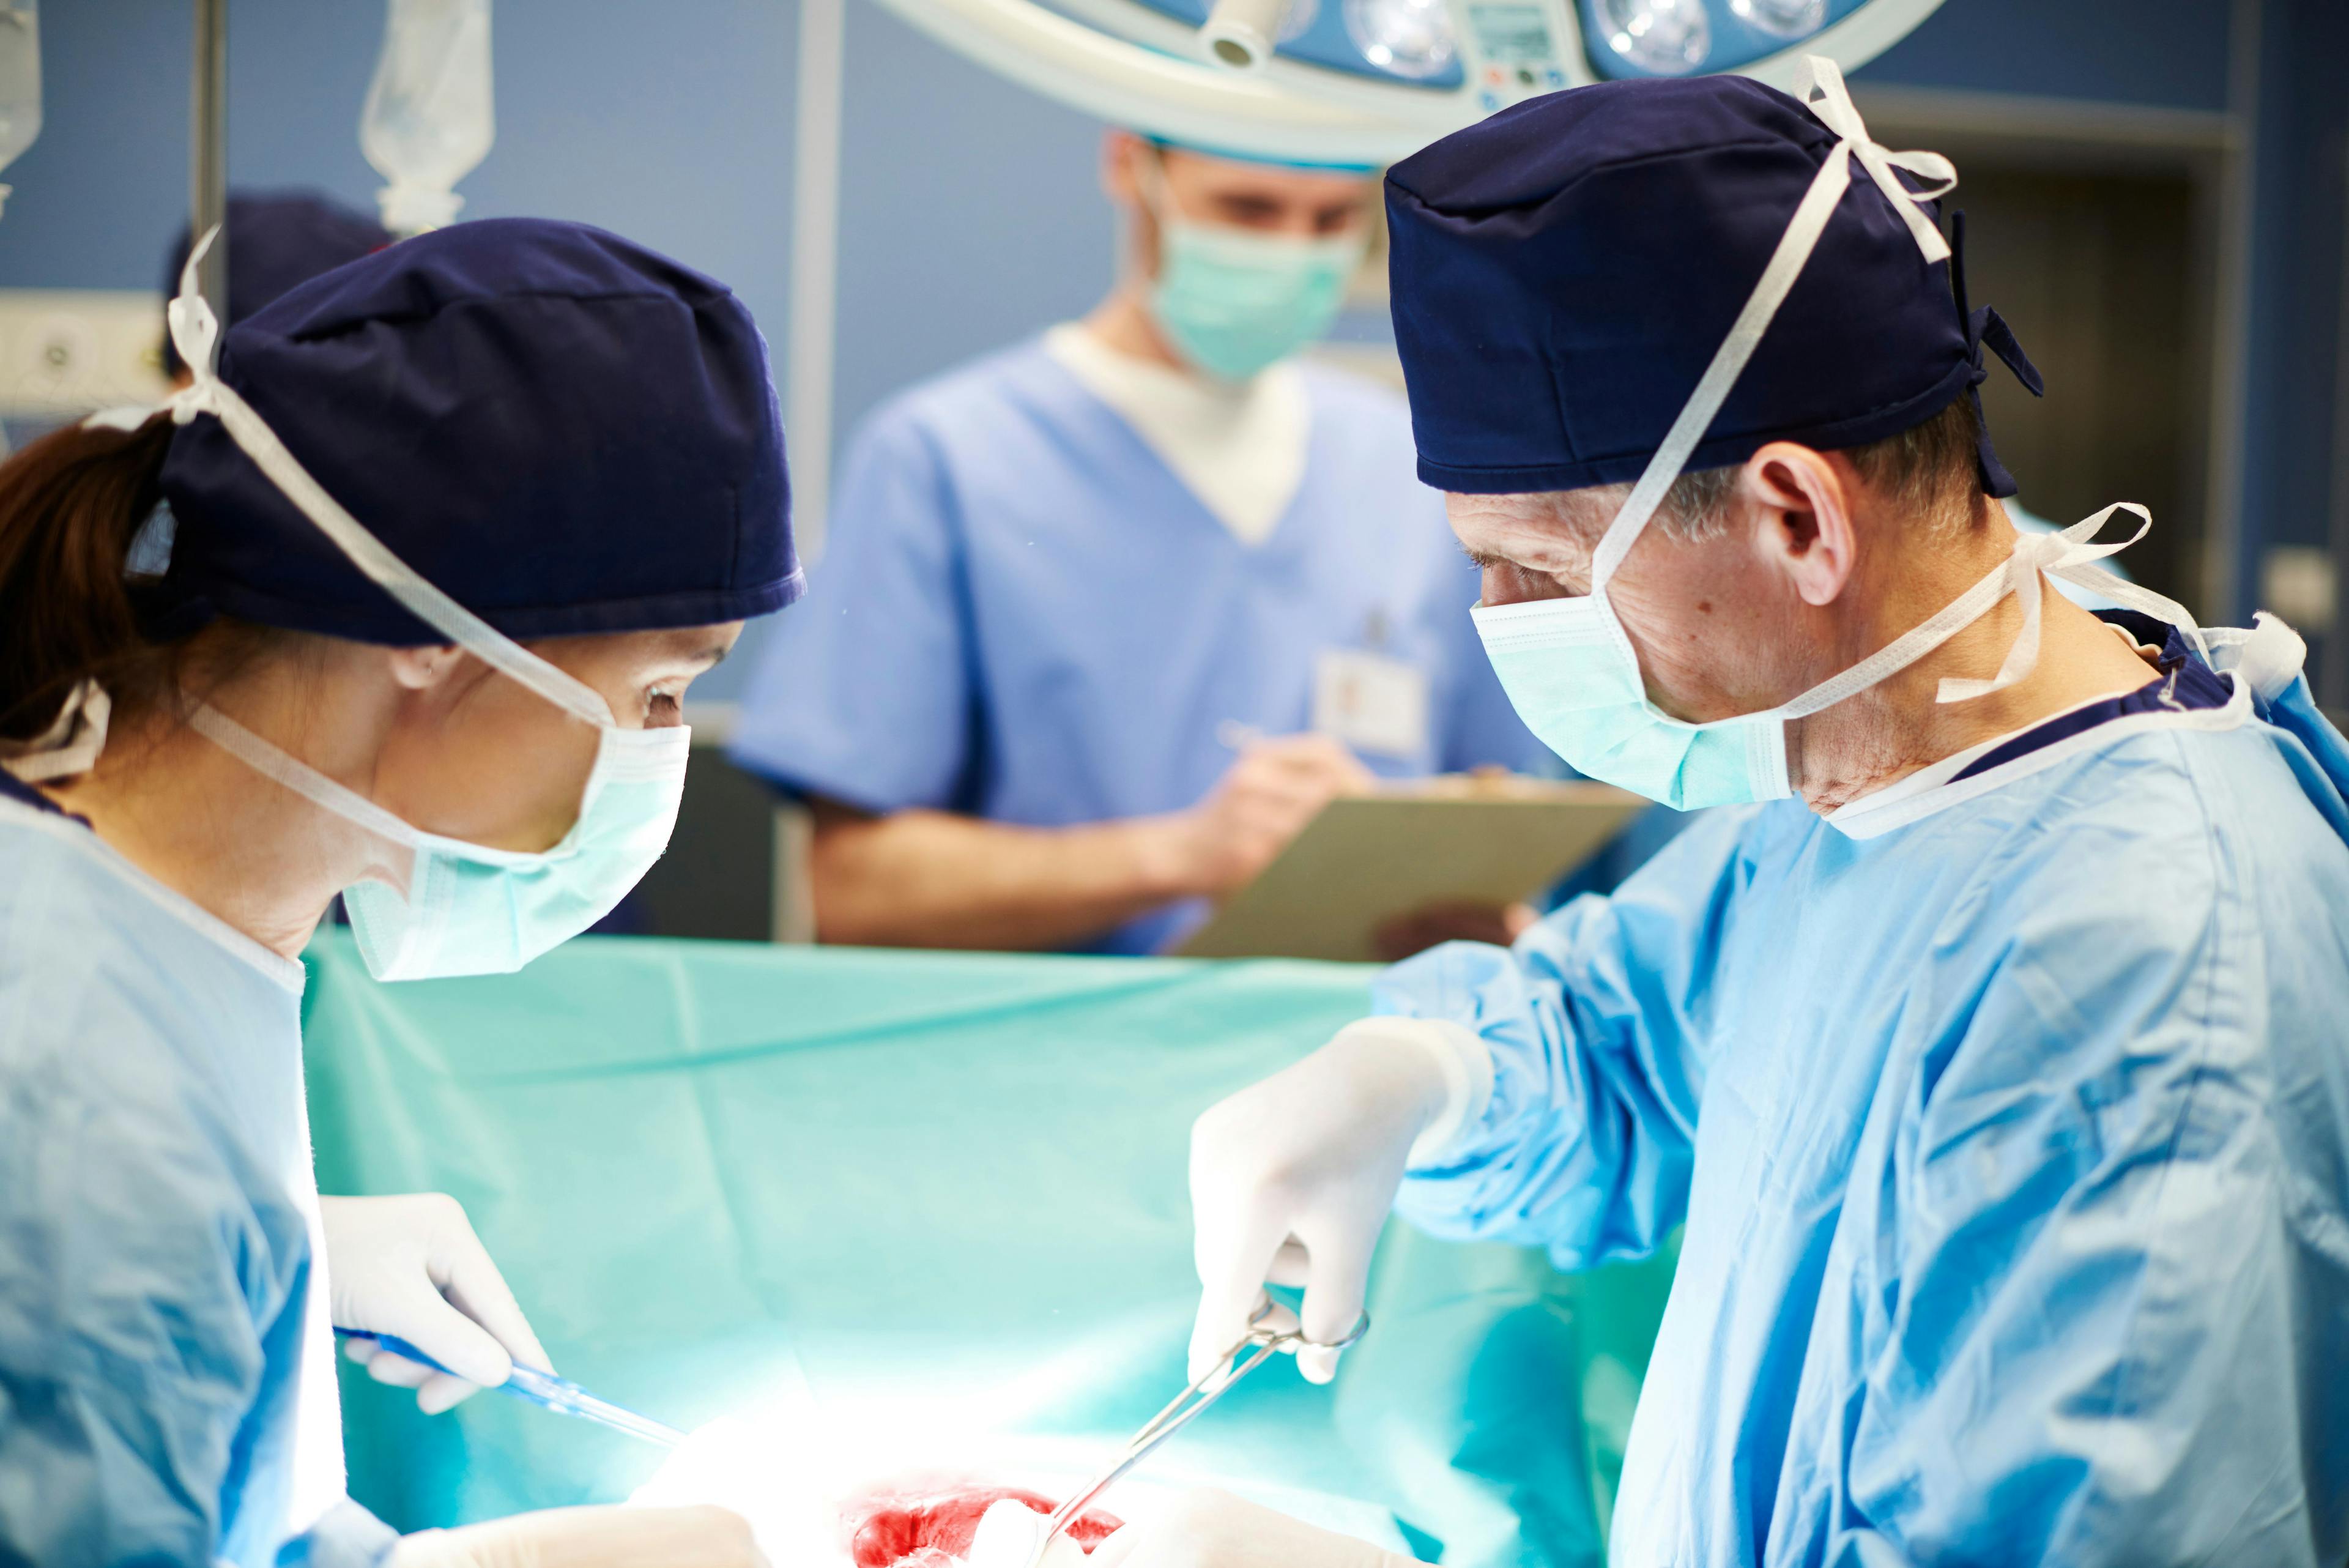 Surgeons Performing Transplant | image credit: gpointstudio  - stock.adobe.com